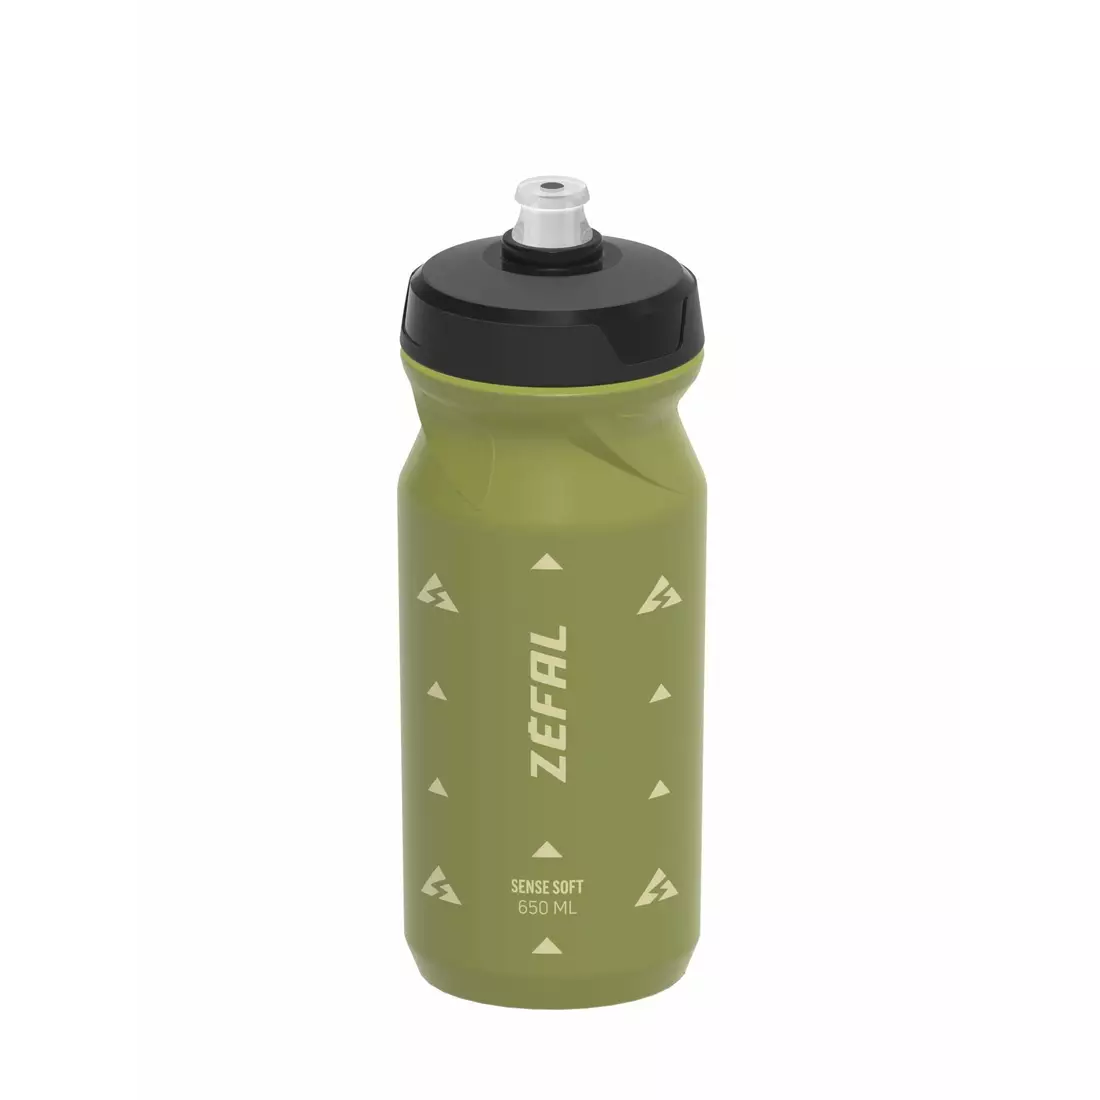 ZEFAL SENSE SOFT 65 bicycle water bottle 650 ml olive